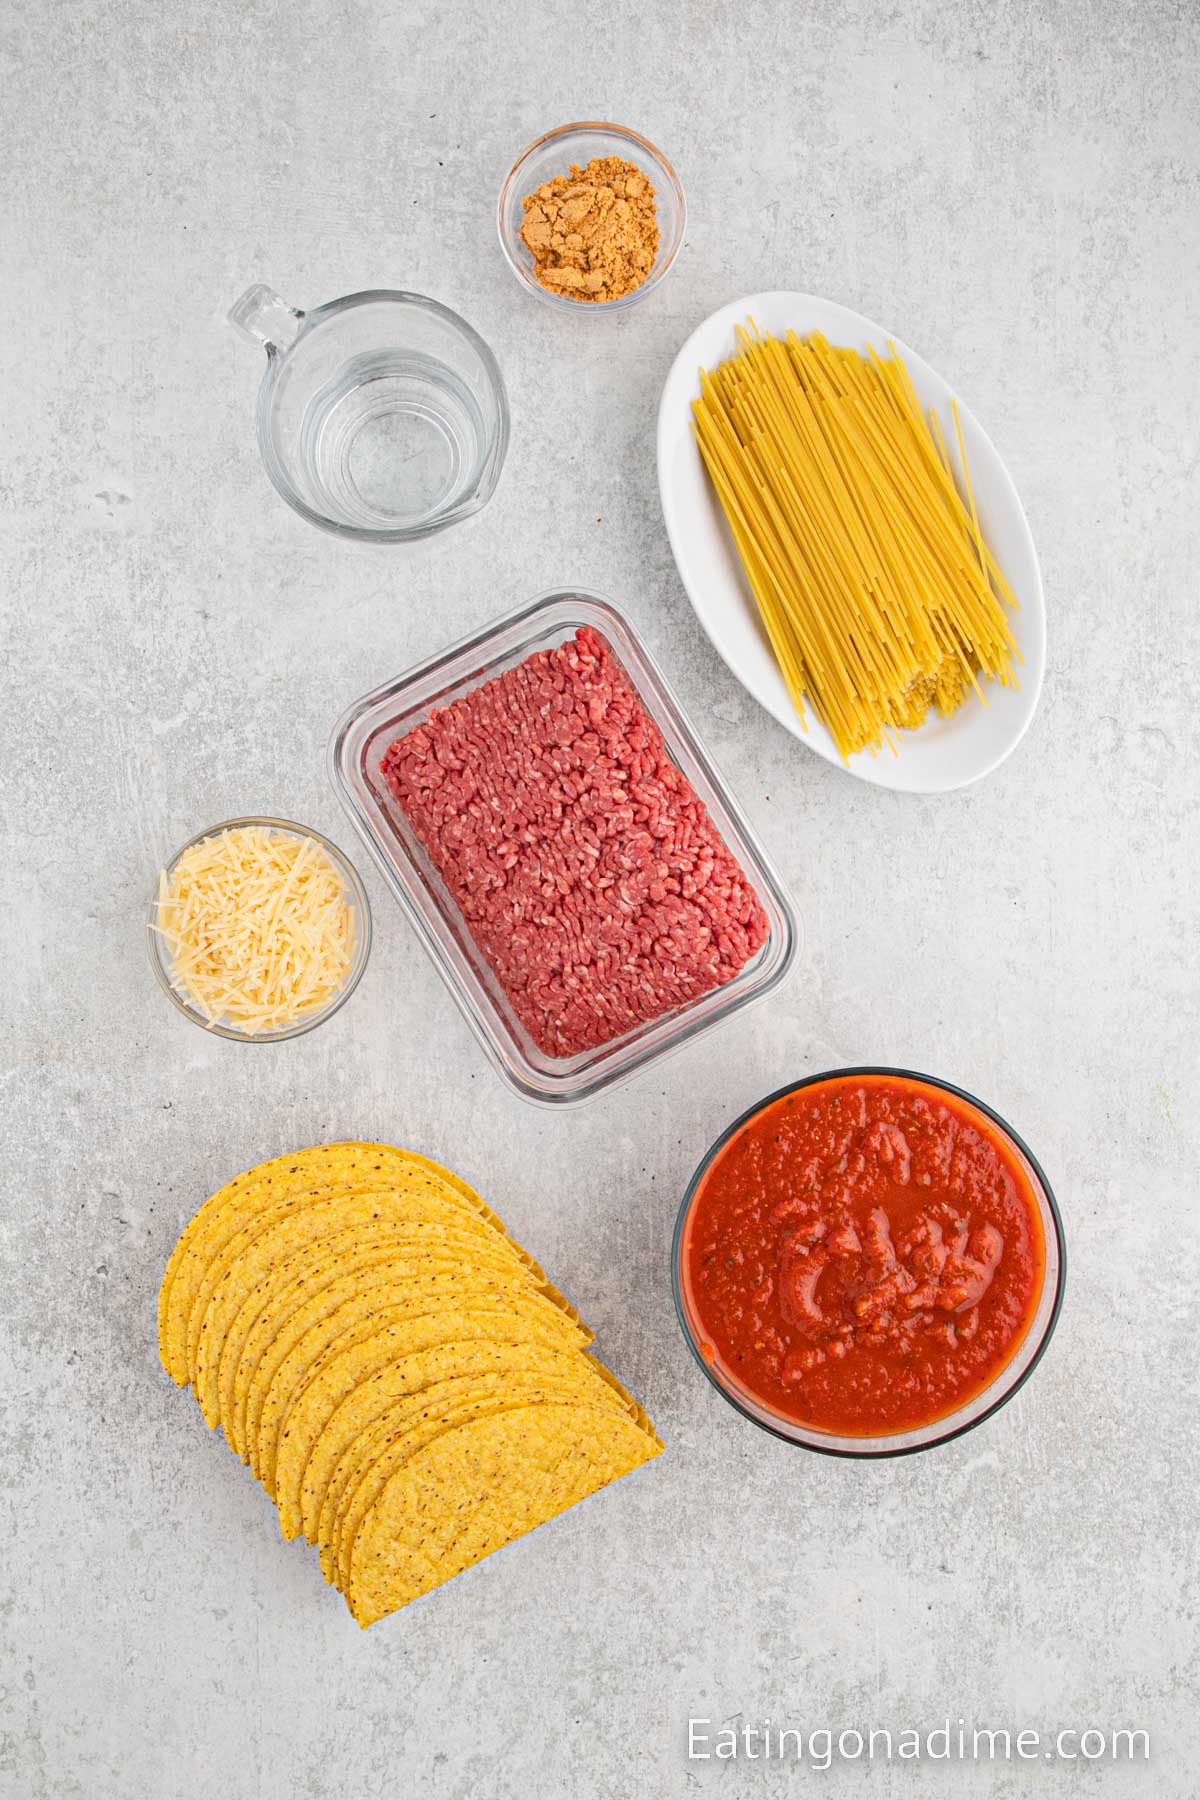 Ingredients needed - noodles, beef, taco seasoning, sauce, taco shells, parmesan cheese